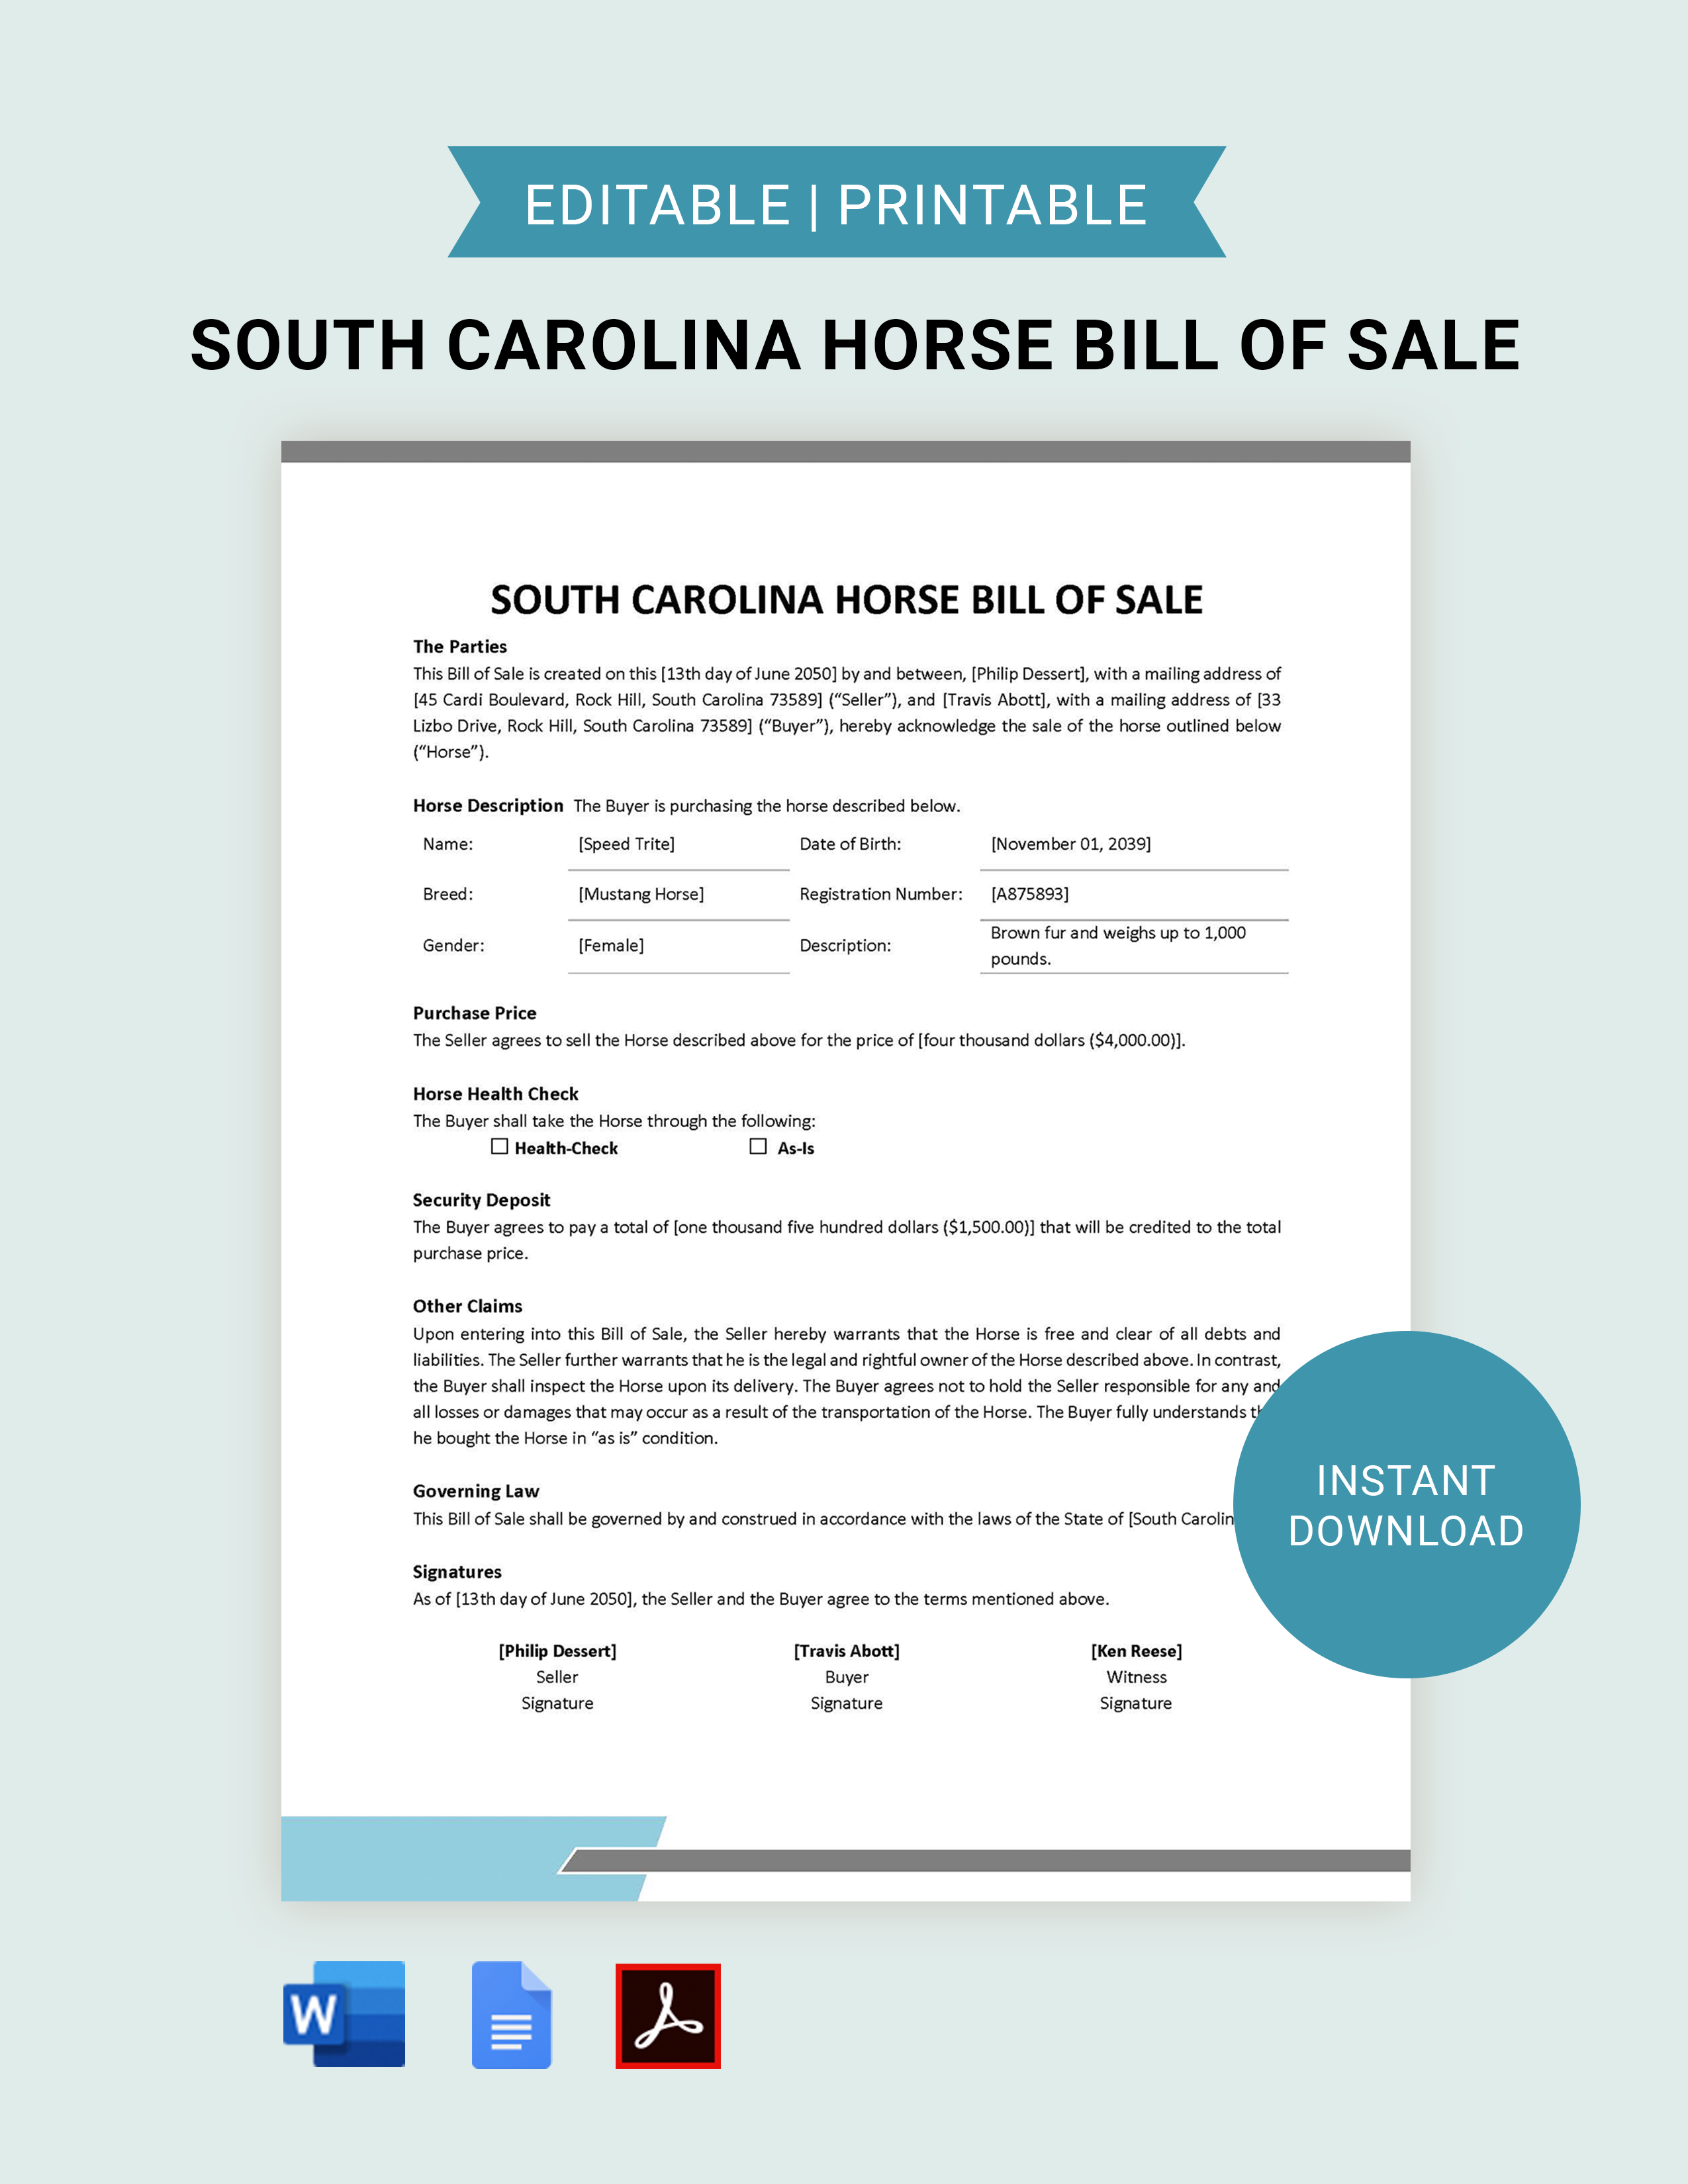 South Carolina Horse Bill of Sale Template